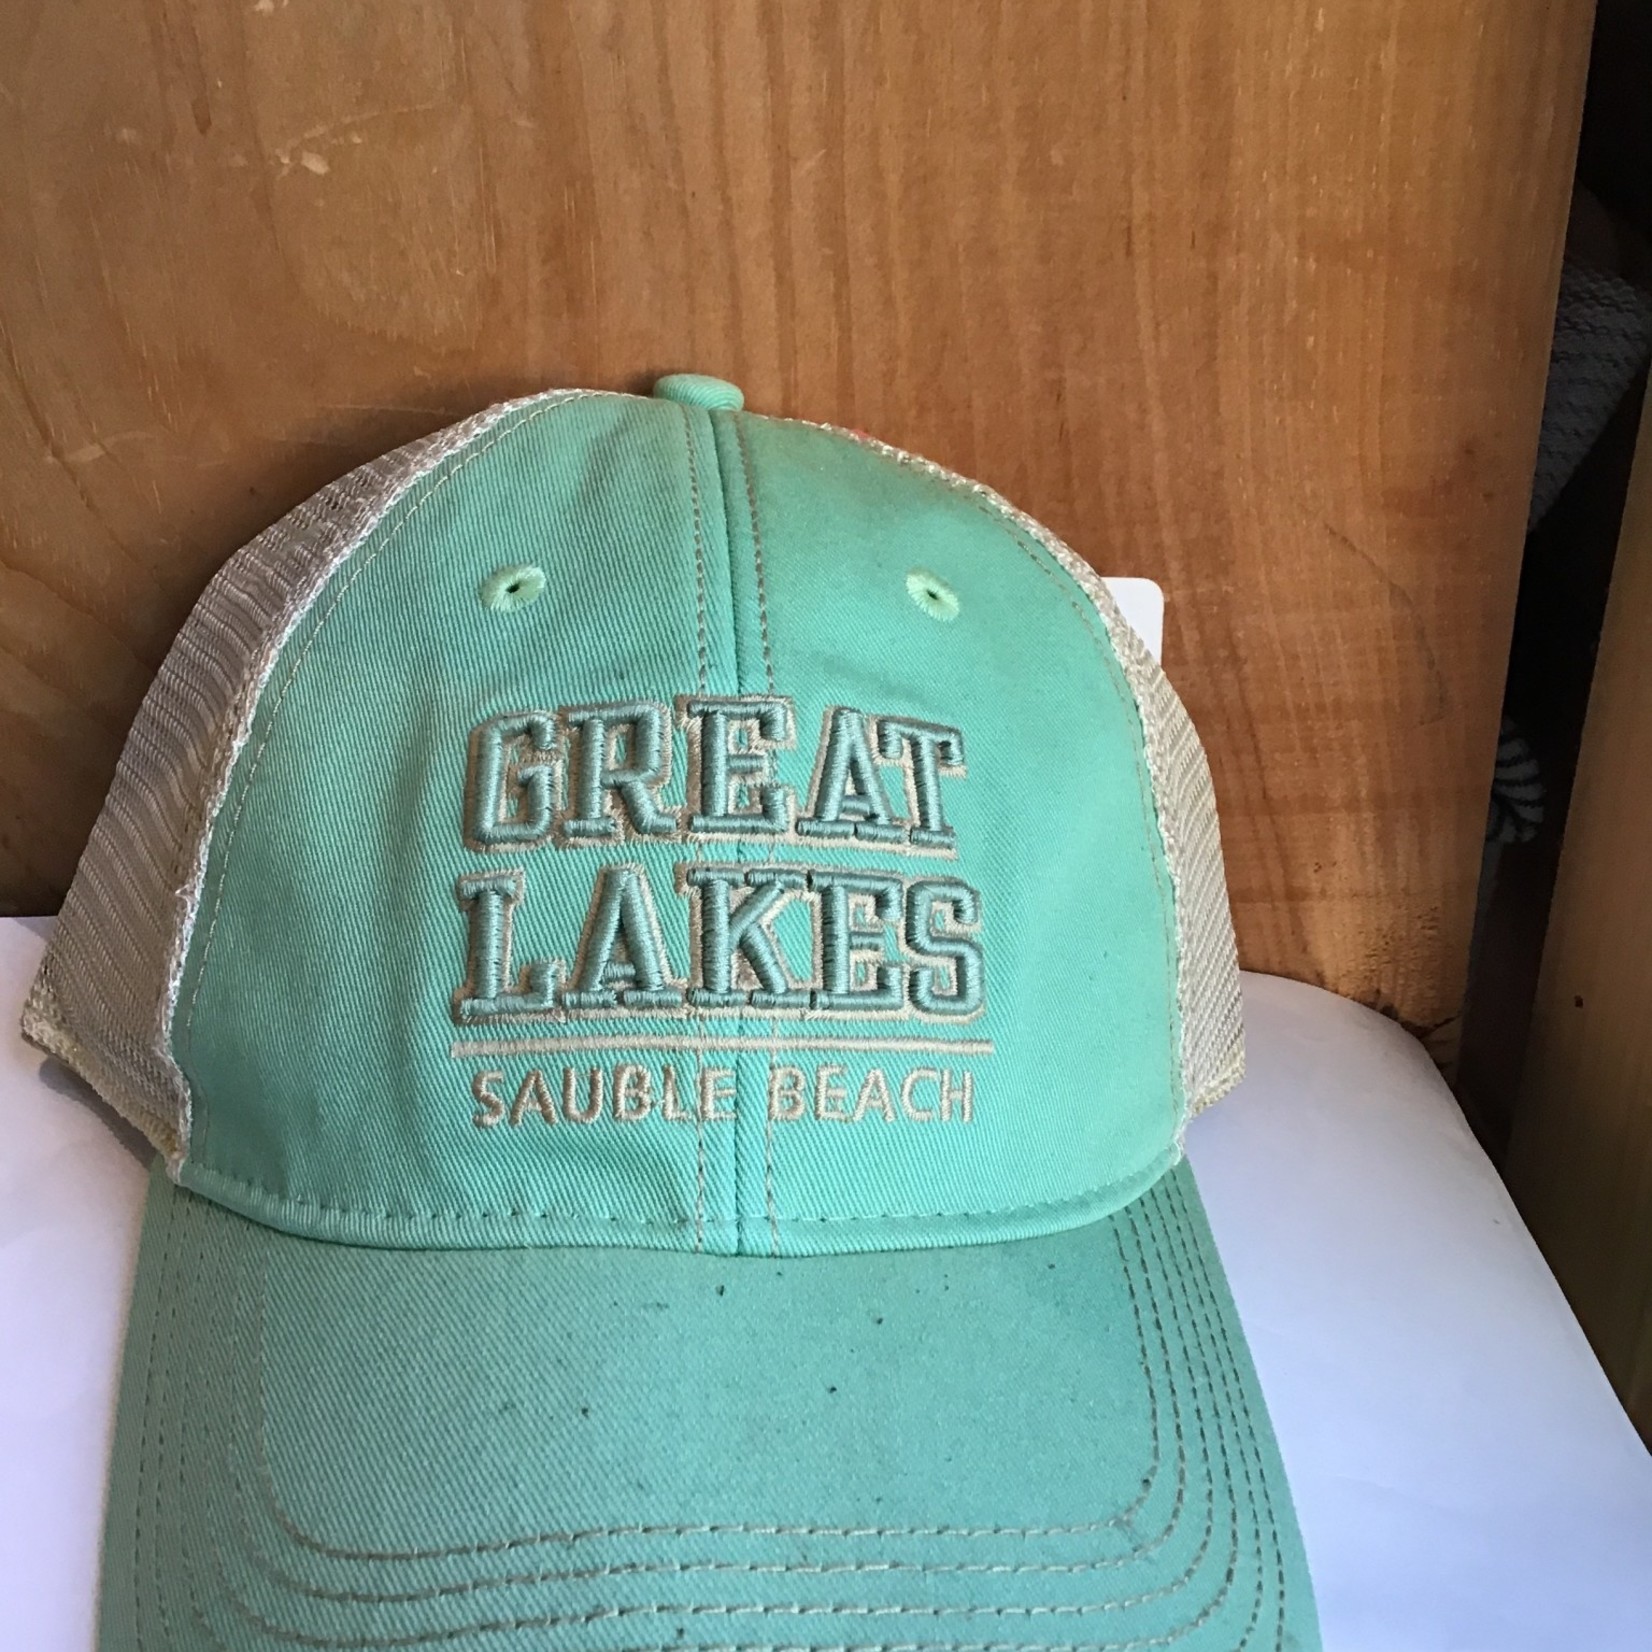 Sauble Beach Great Lakes block hat